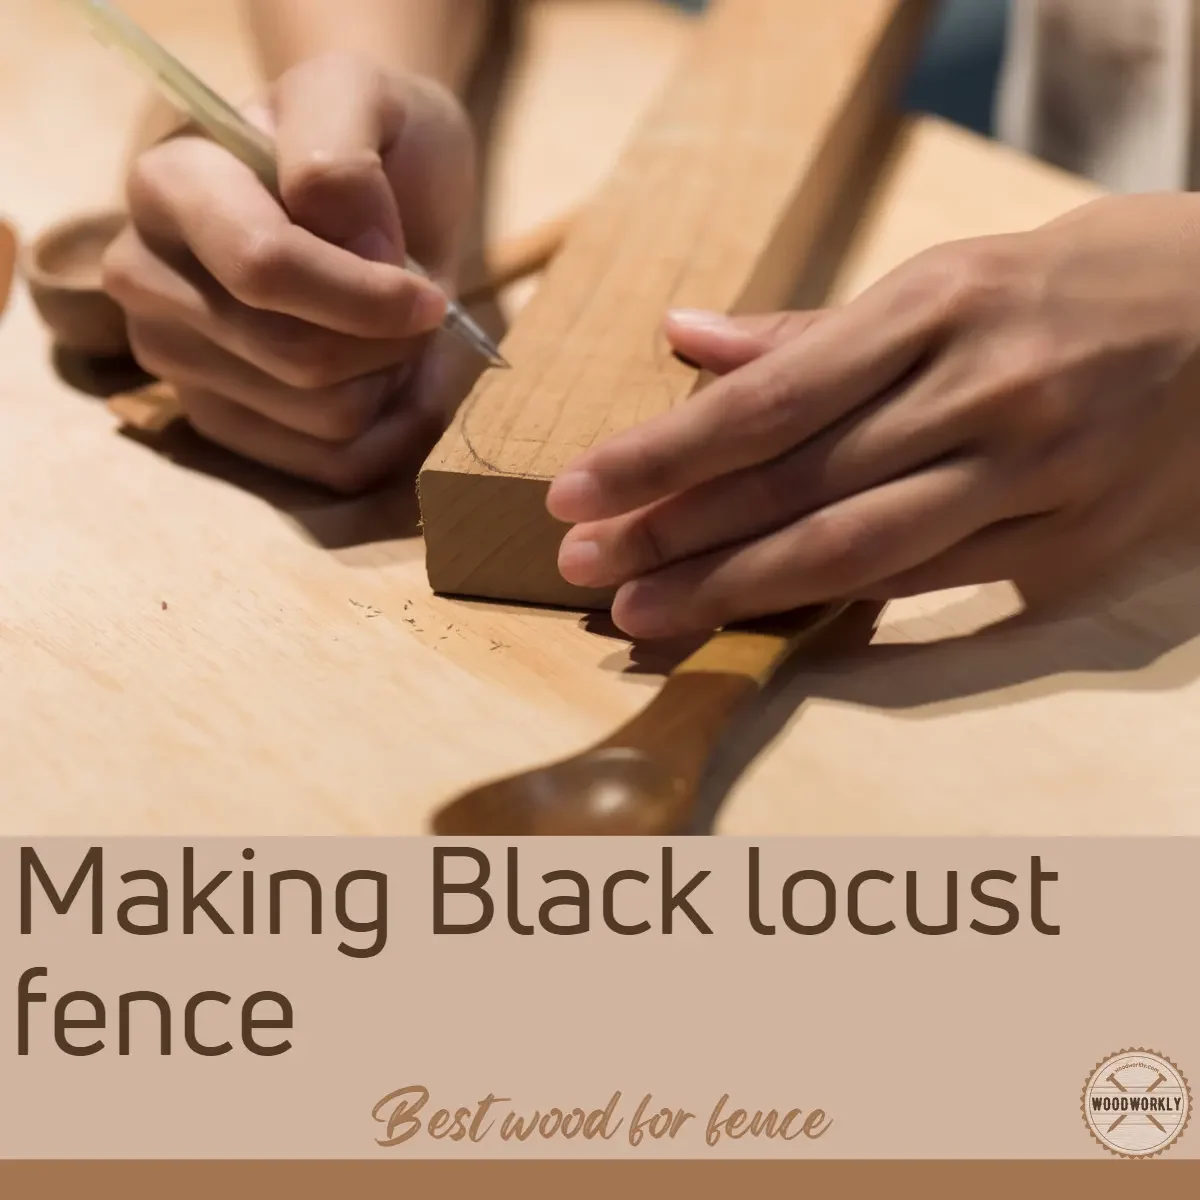 Making Black locust fence